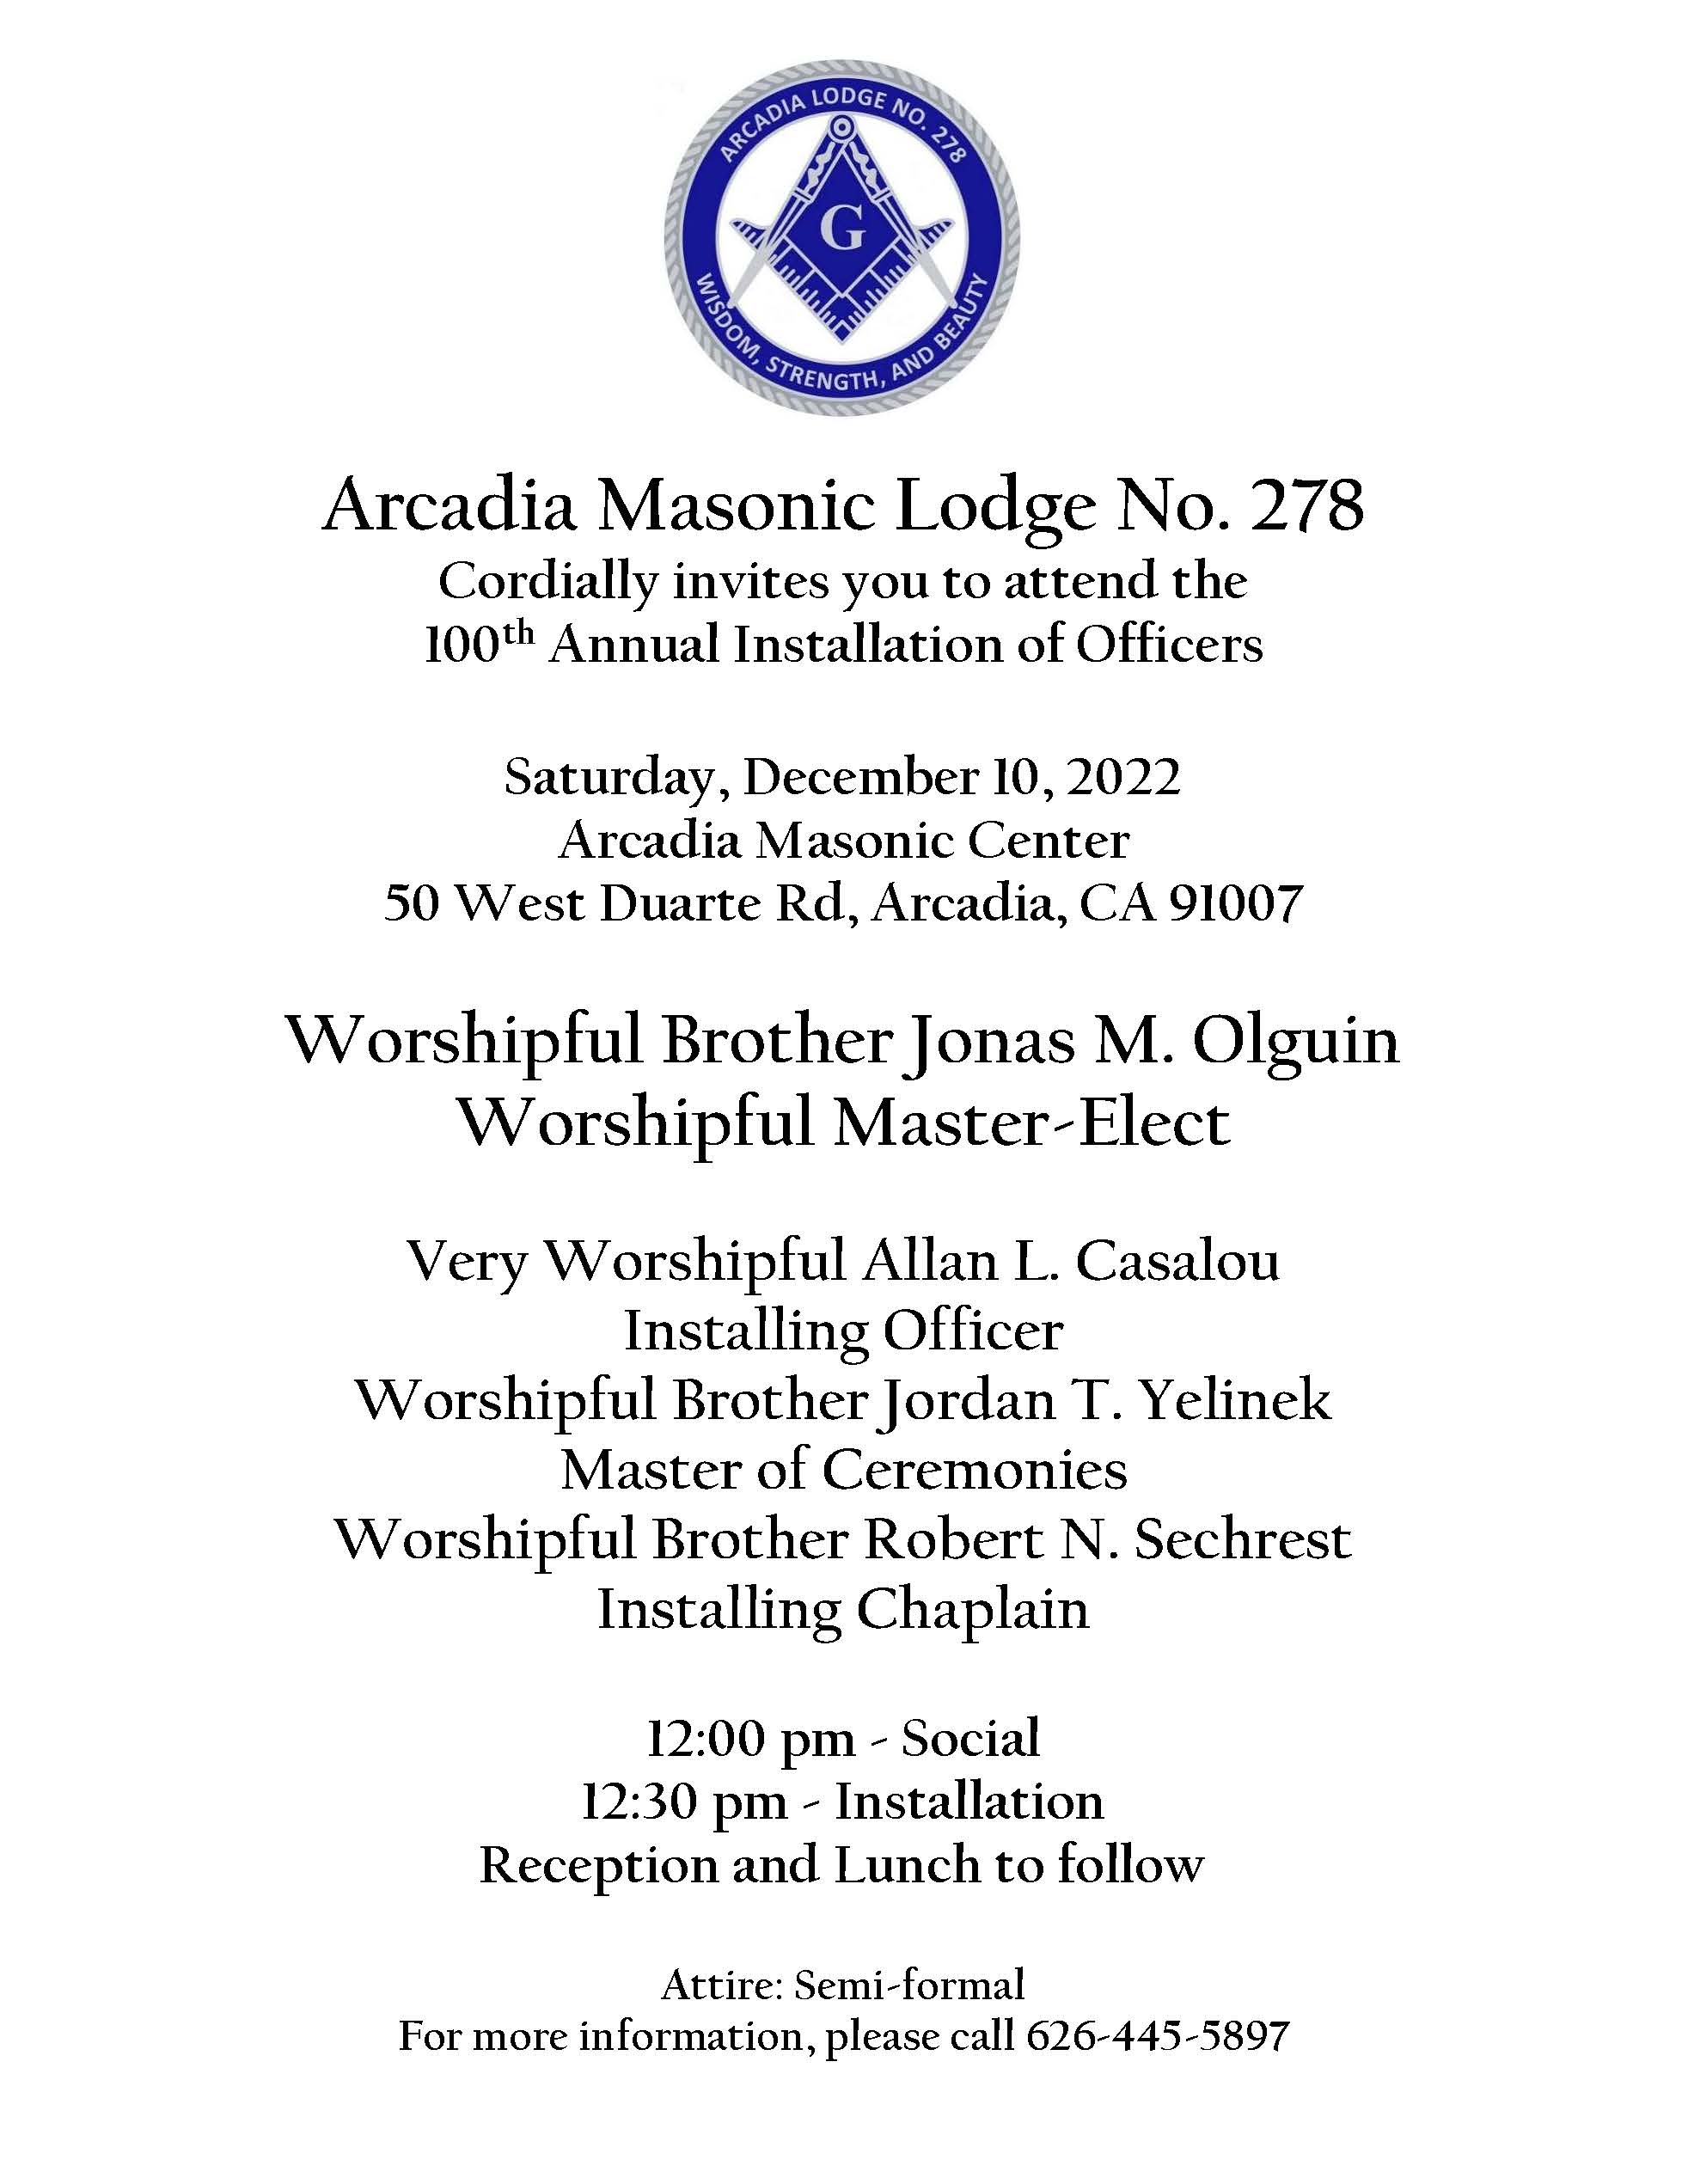 Arcadia Masonic Lodge installation event information 